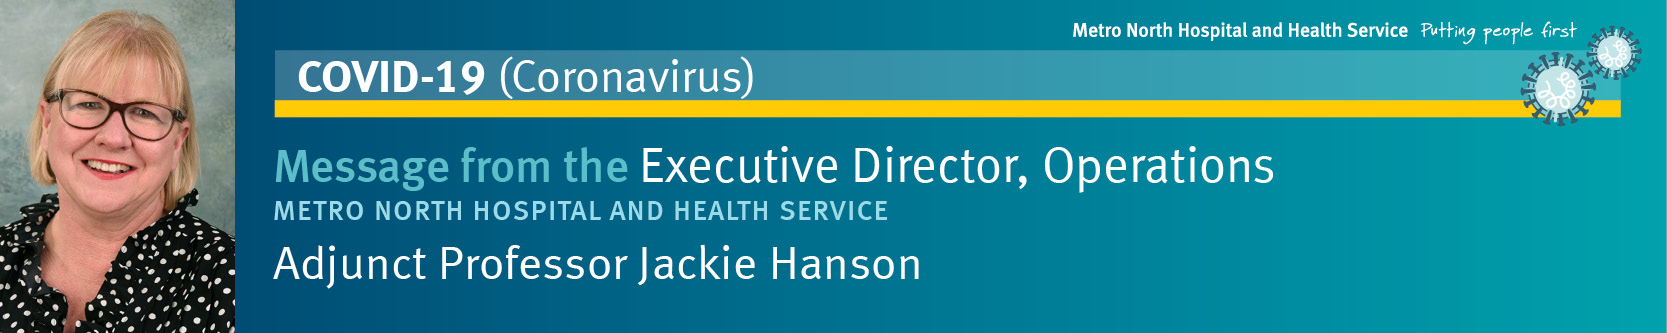 Executive Director, Operations Jackie Hanson